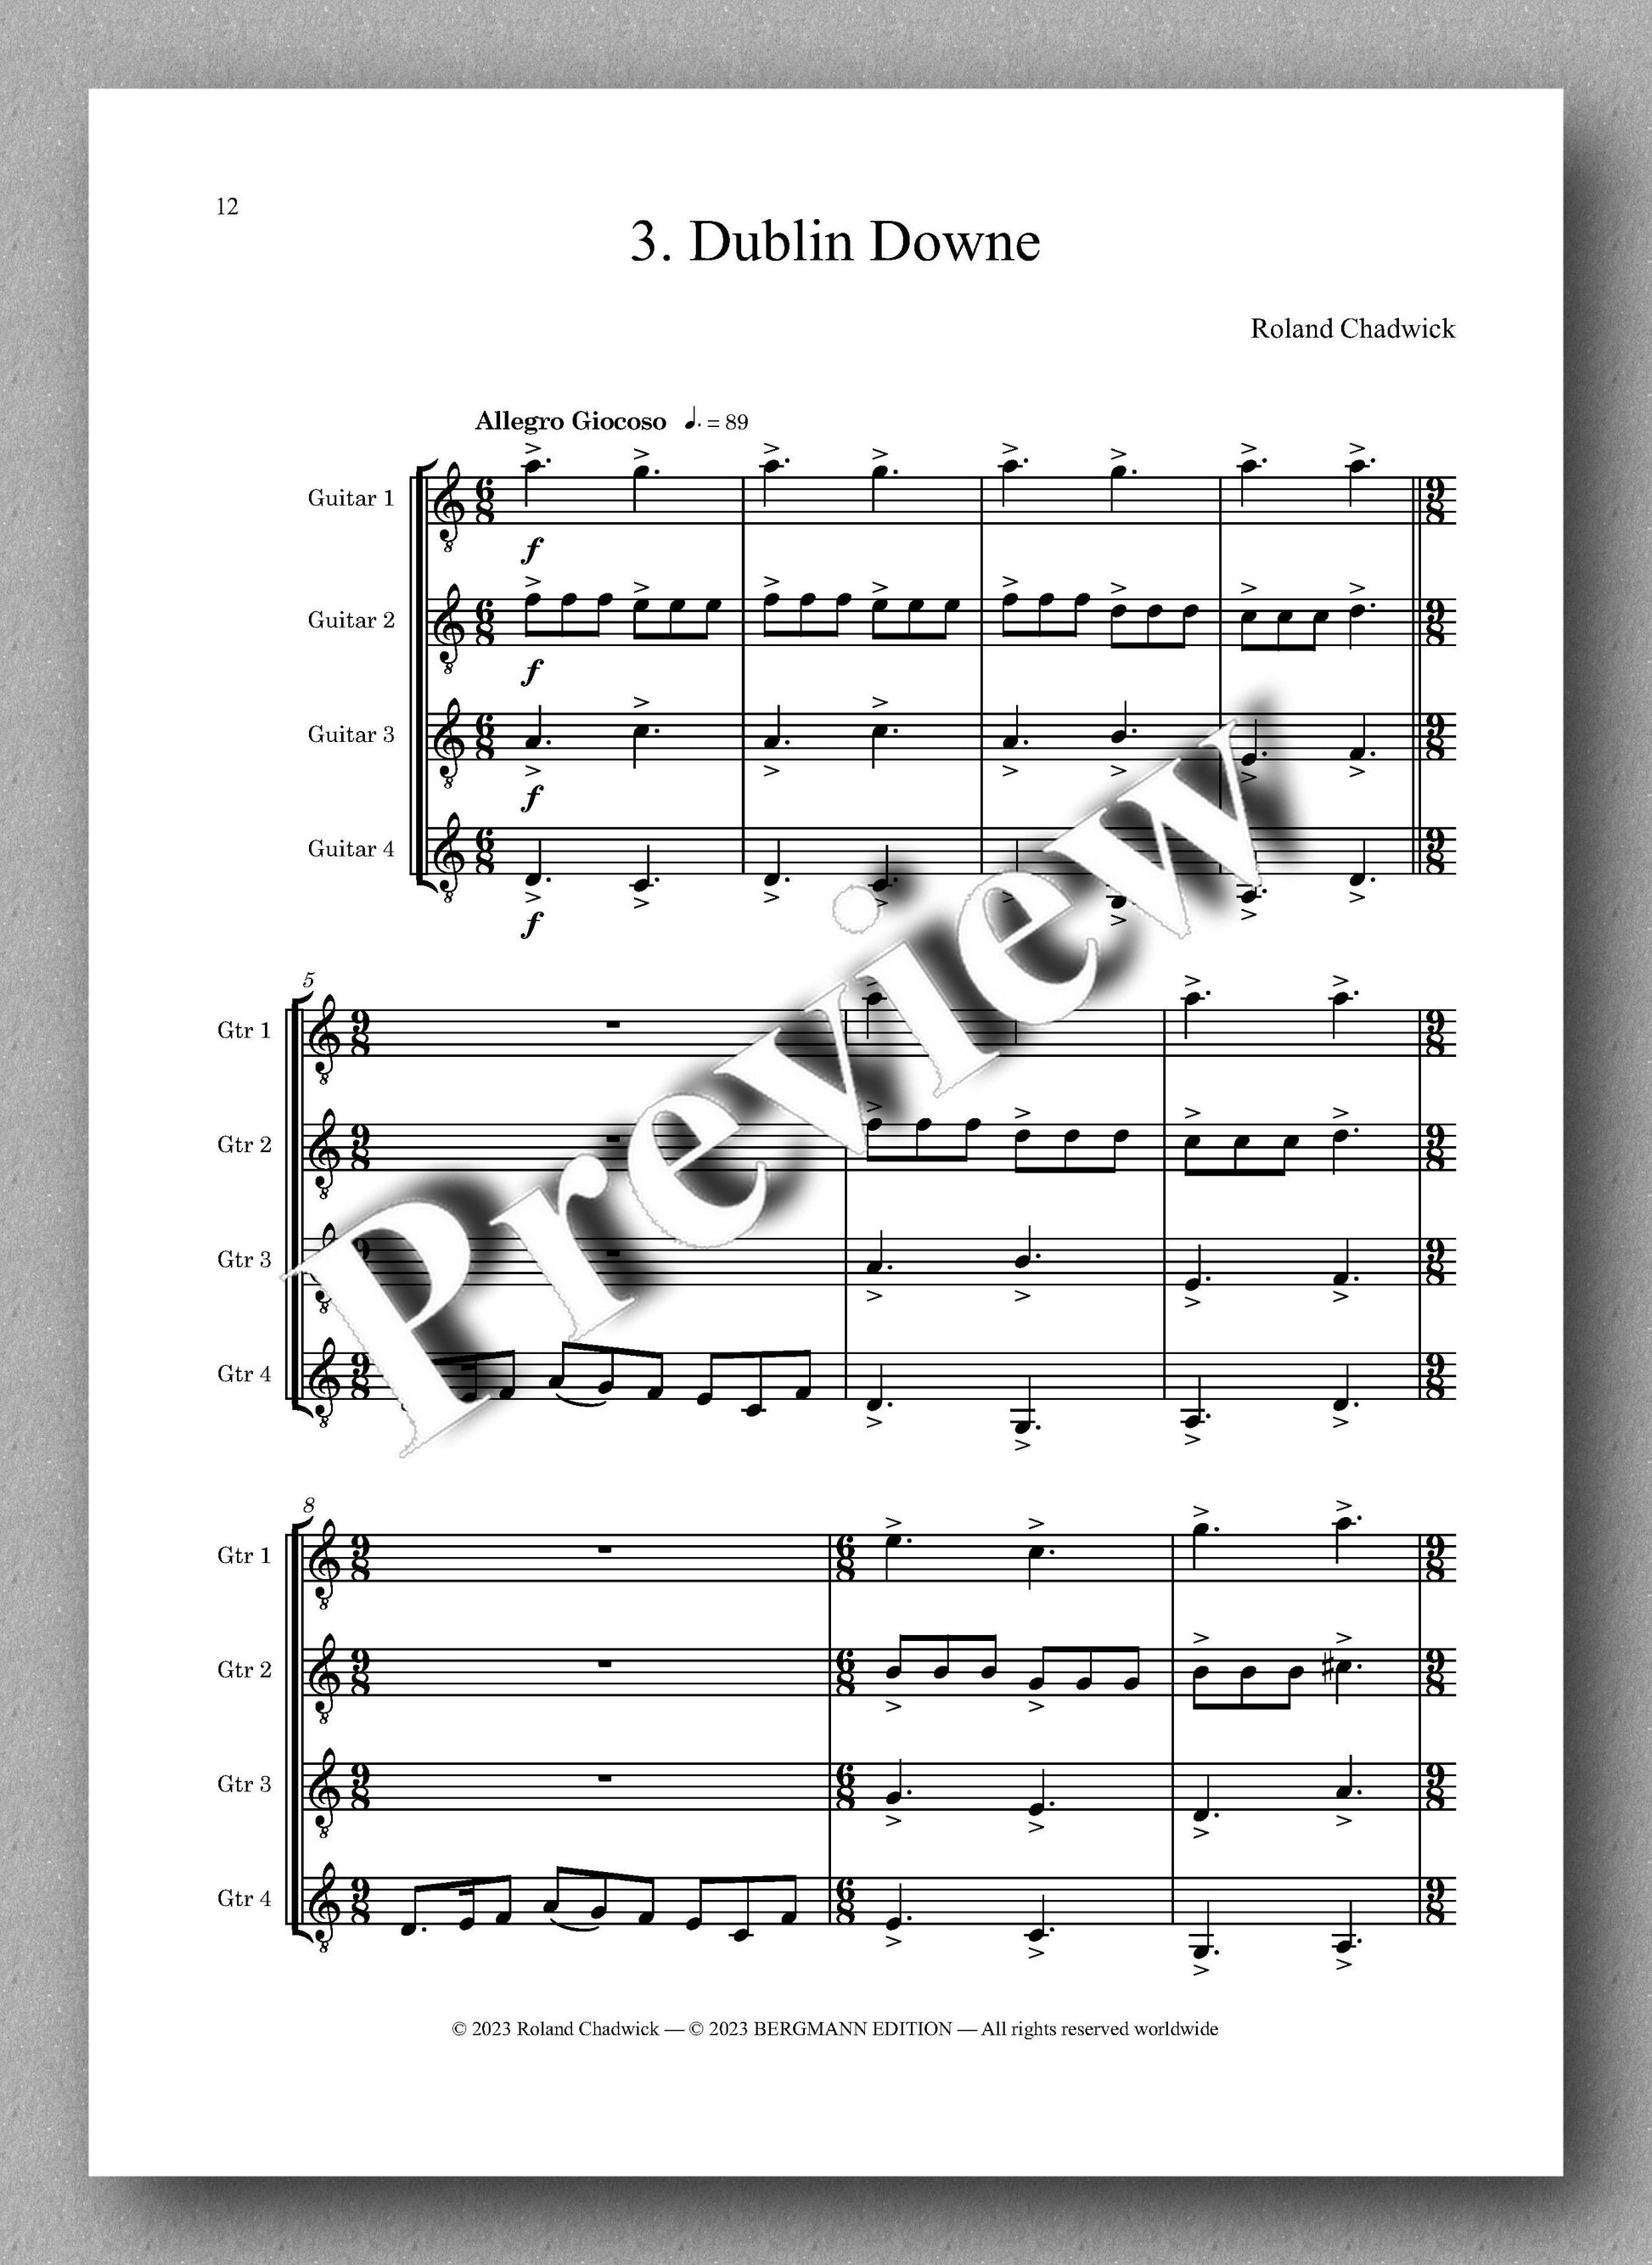 Roland Chadwick, Irish Hoanane - preview of the music score 3